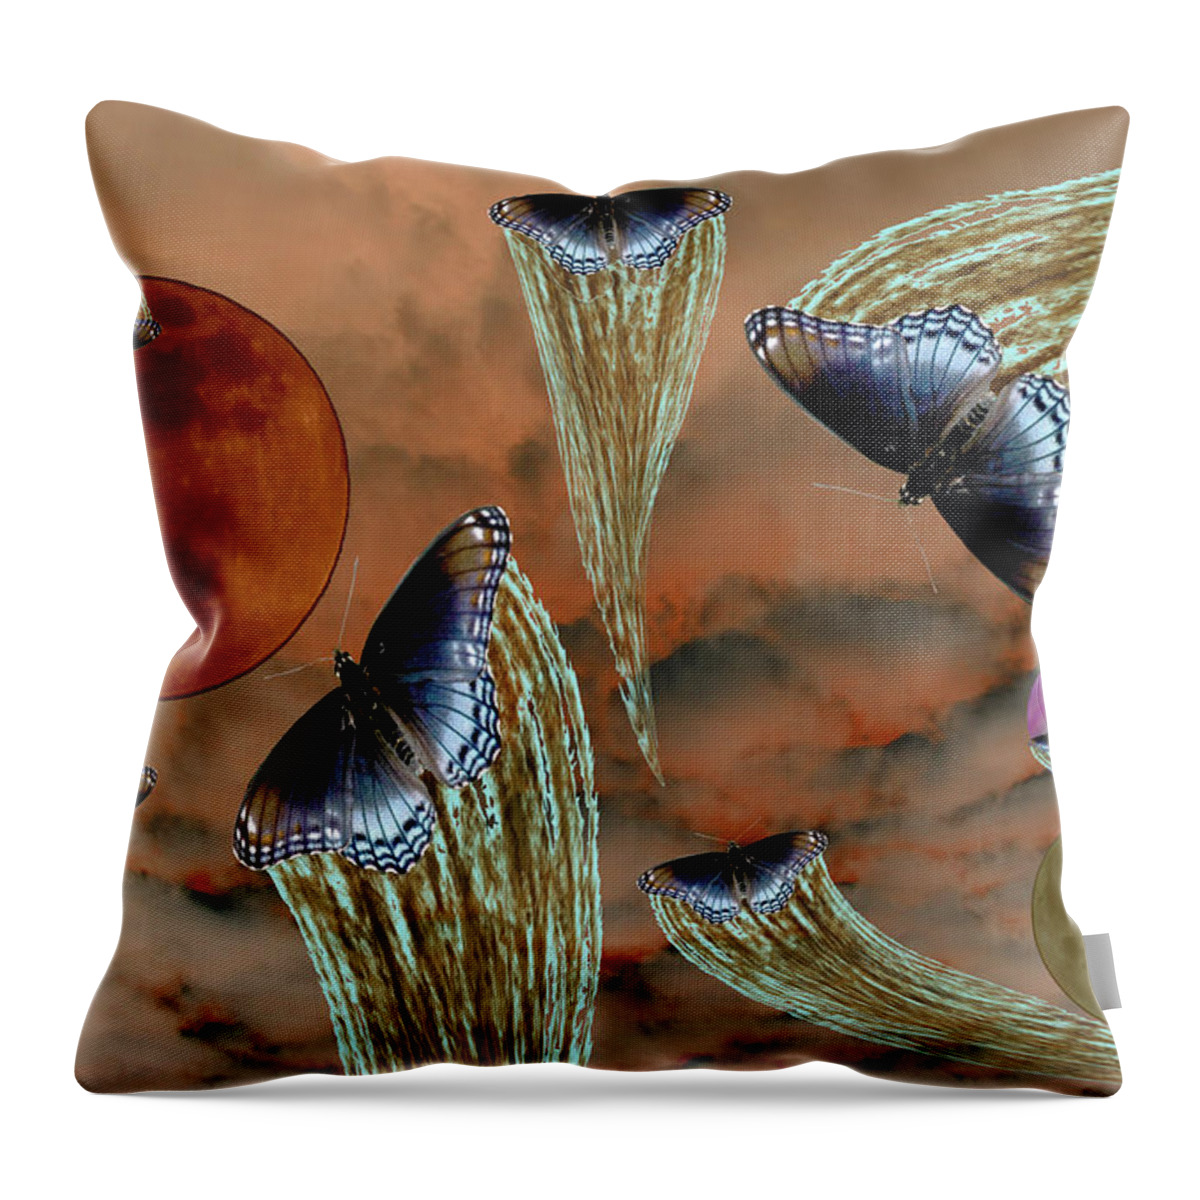 Planet Throw Pillow featuring the photograph Celestial Butterflies by David Yocum